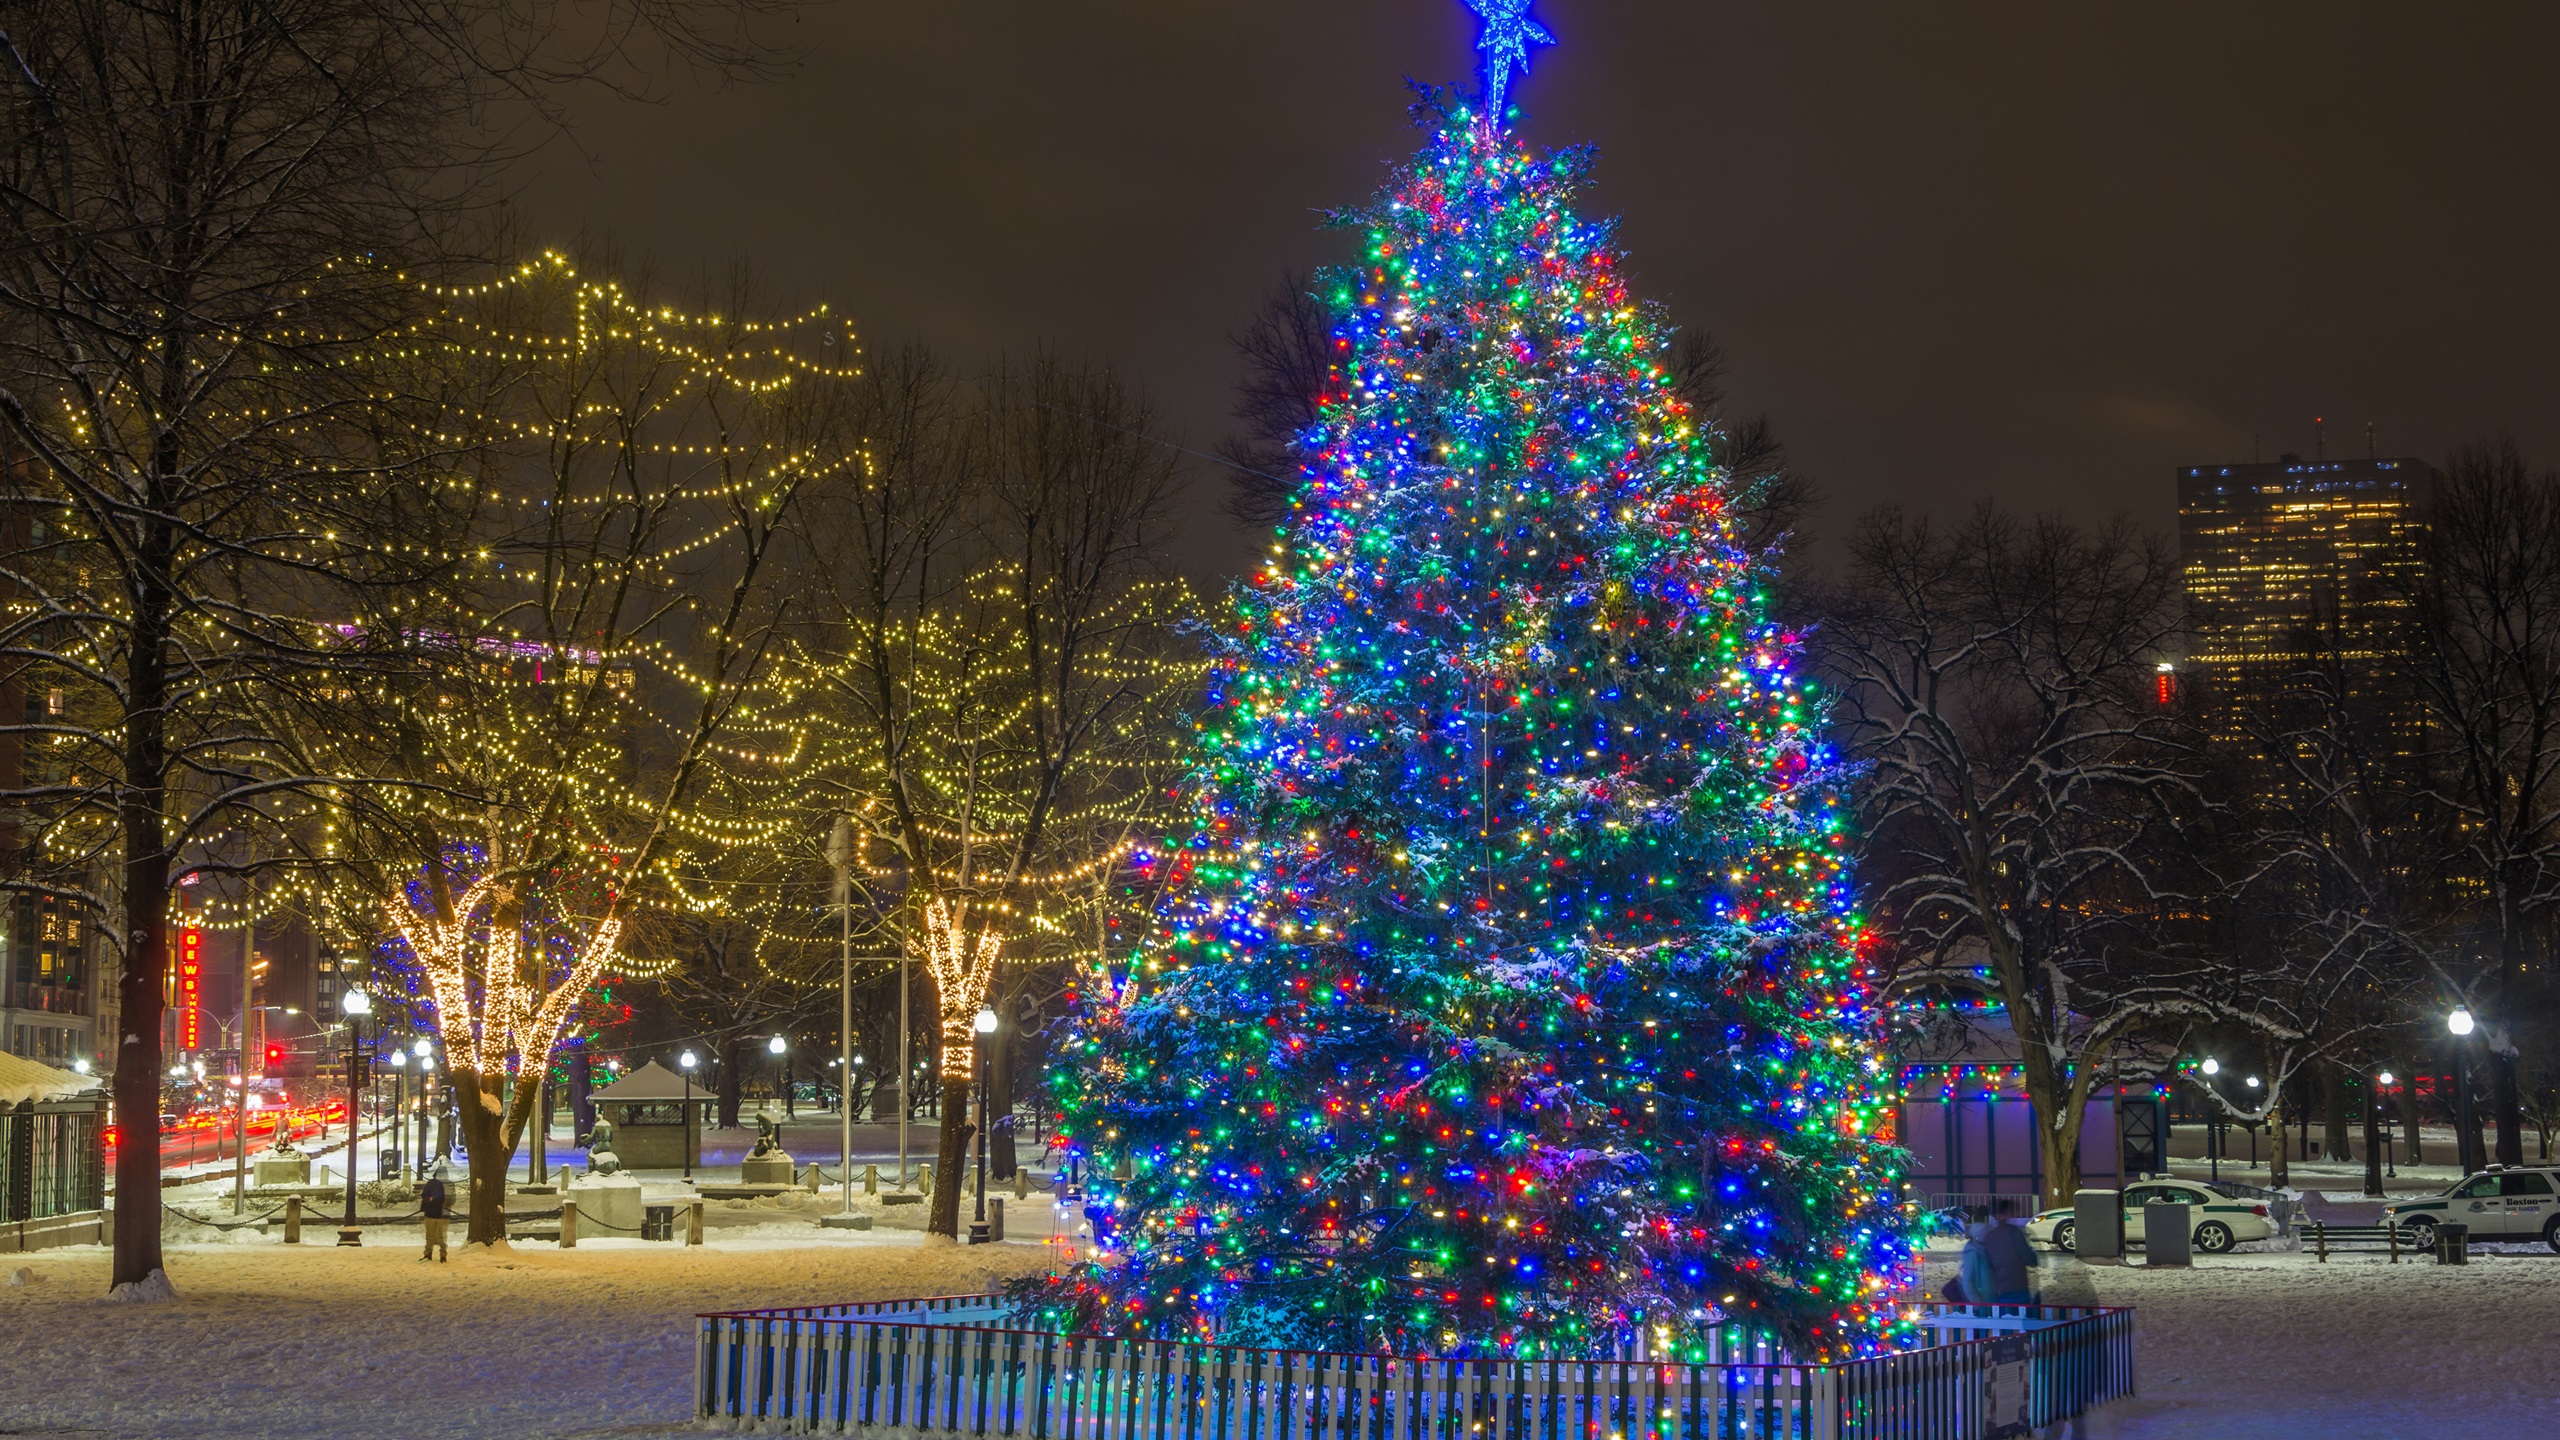 Wallpaper New Year, Christmas tree, lights, night, winter, snow, city 3840x2160 UHD 4K Picture, Image